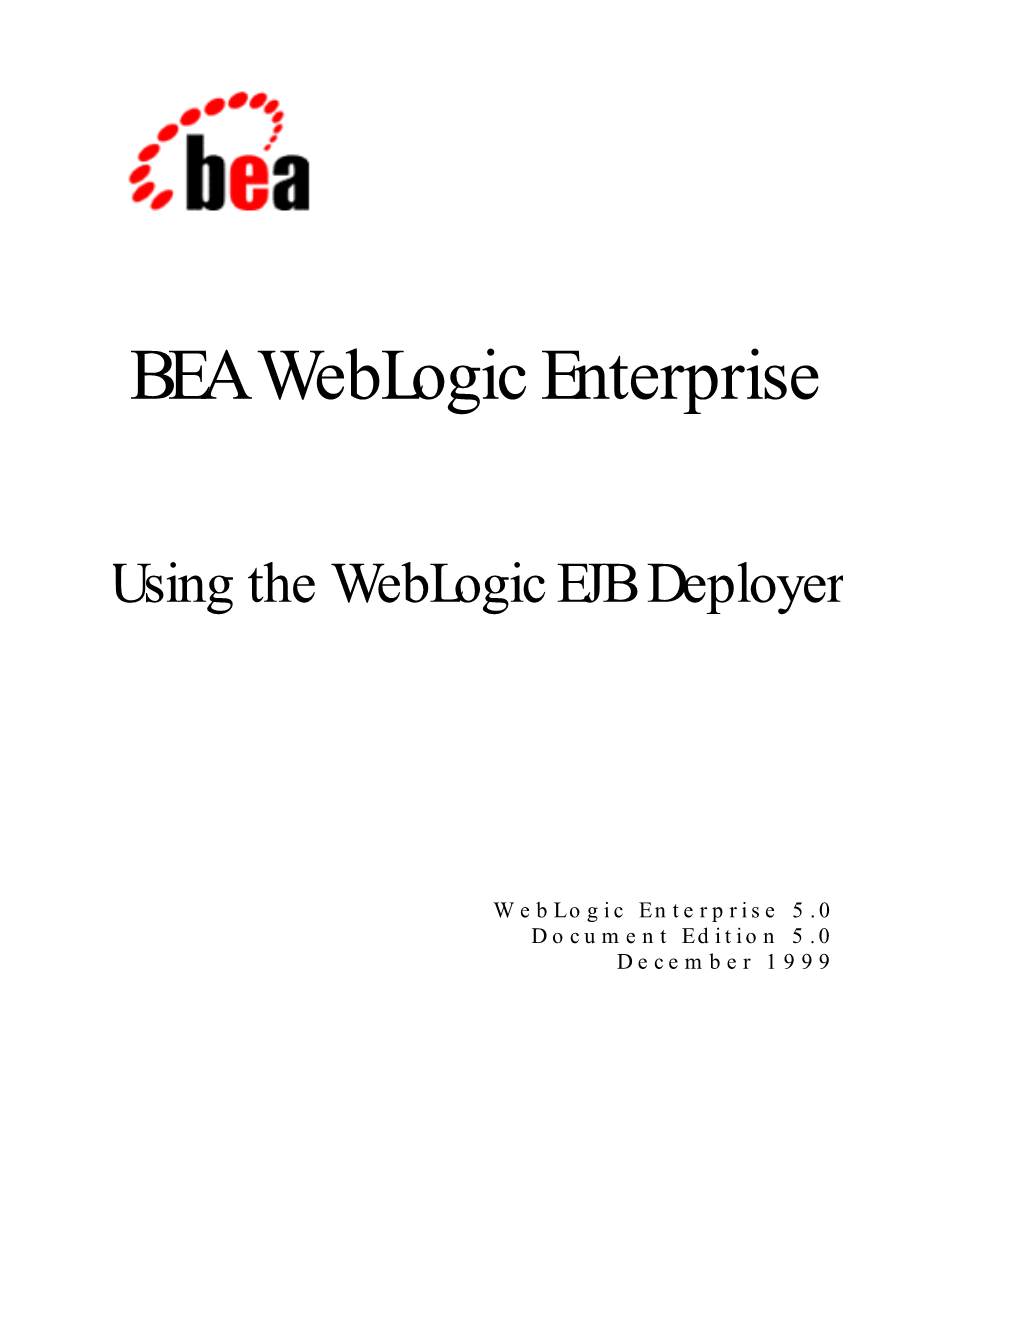 Using the Weblogic EJB Deployer